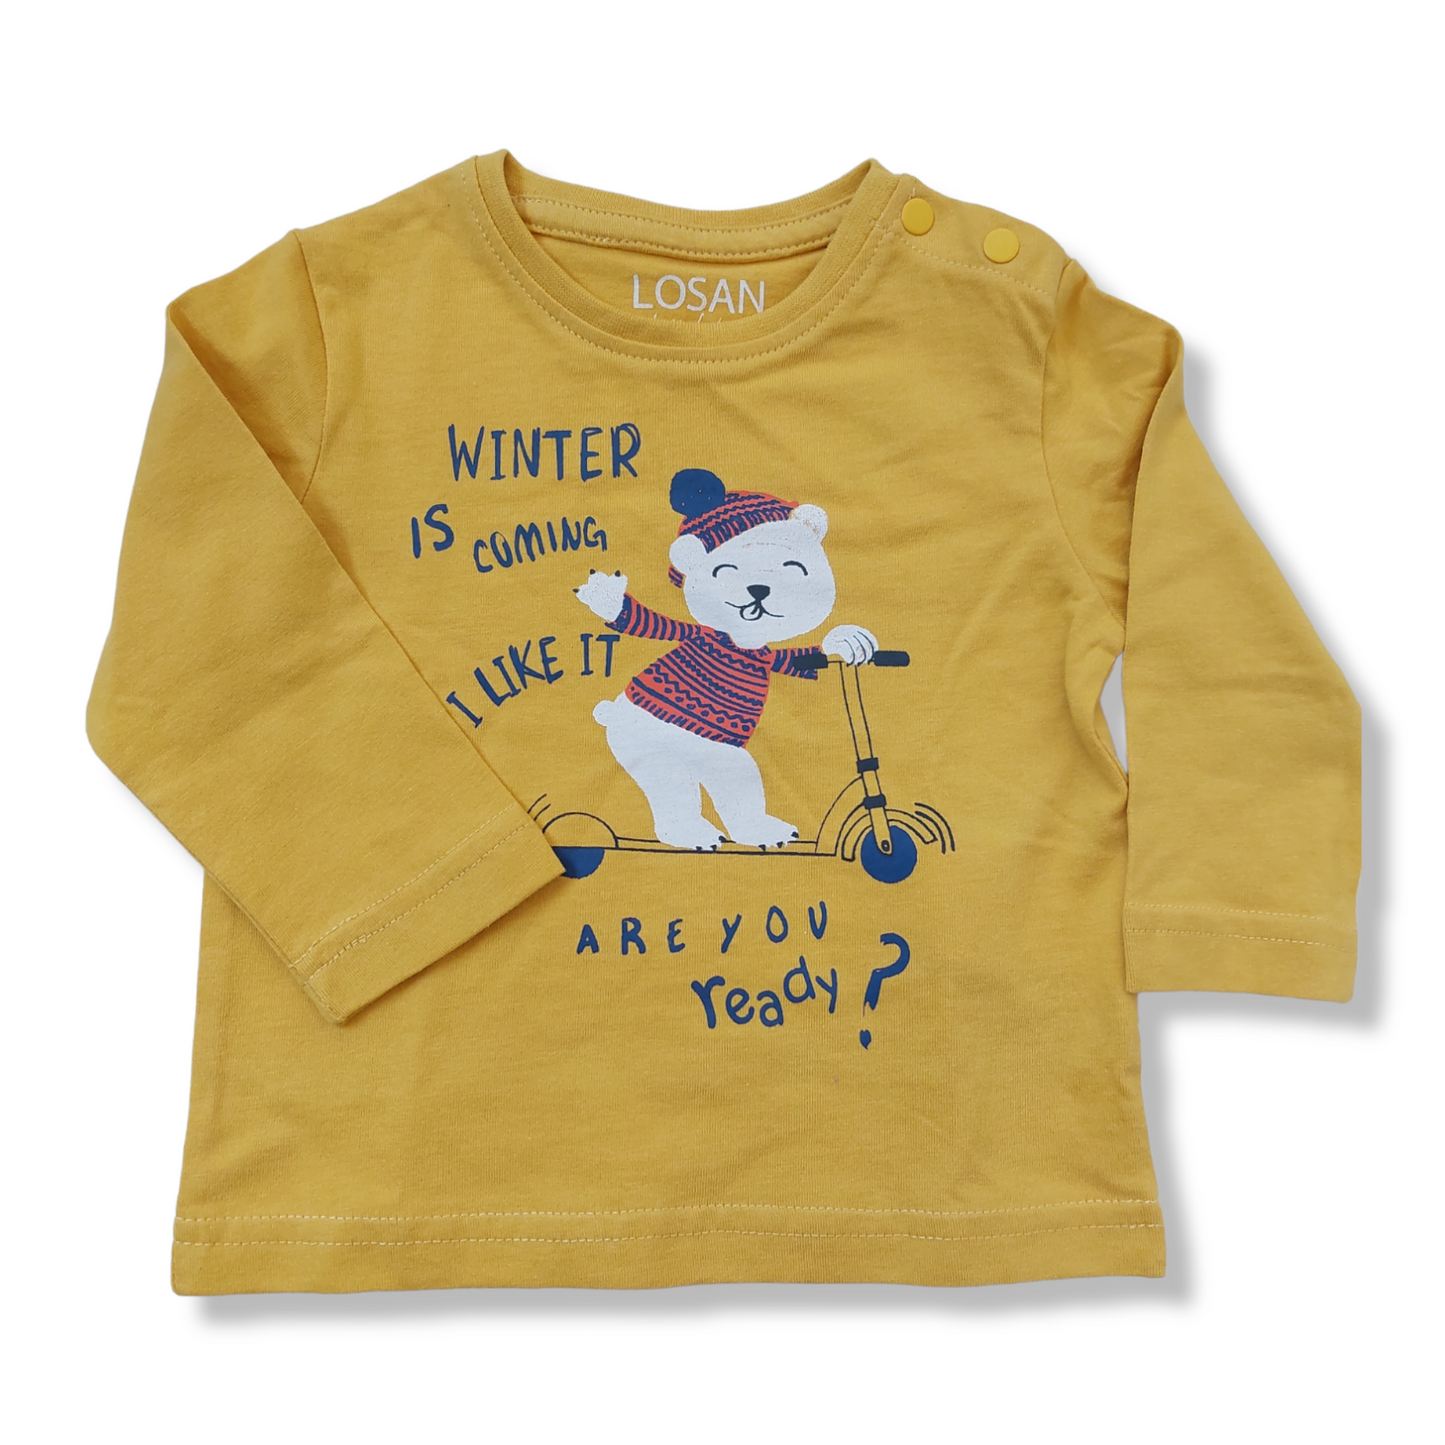 Playera amarilla oso  “WINTER IS COMING I LIKE IT ARE YOU READY” bebé niño losan